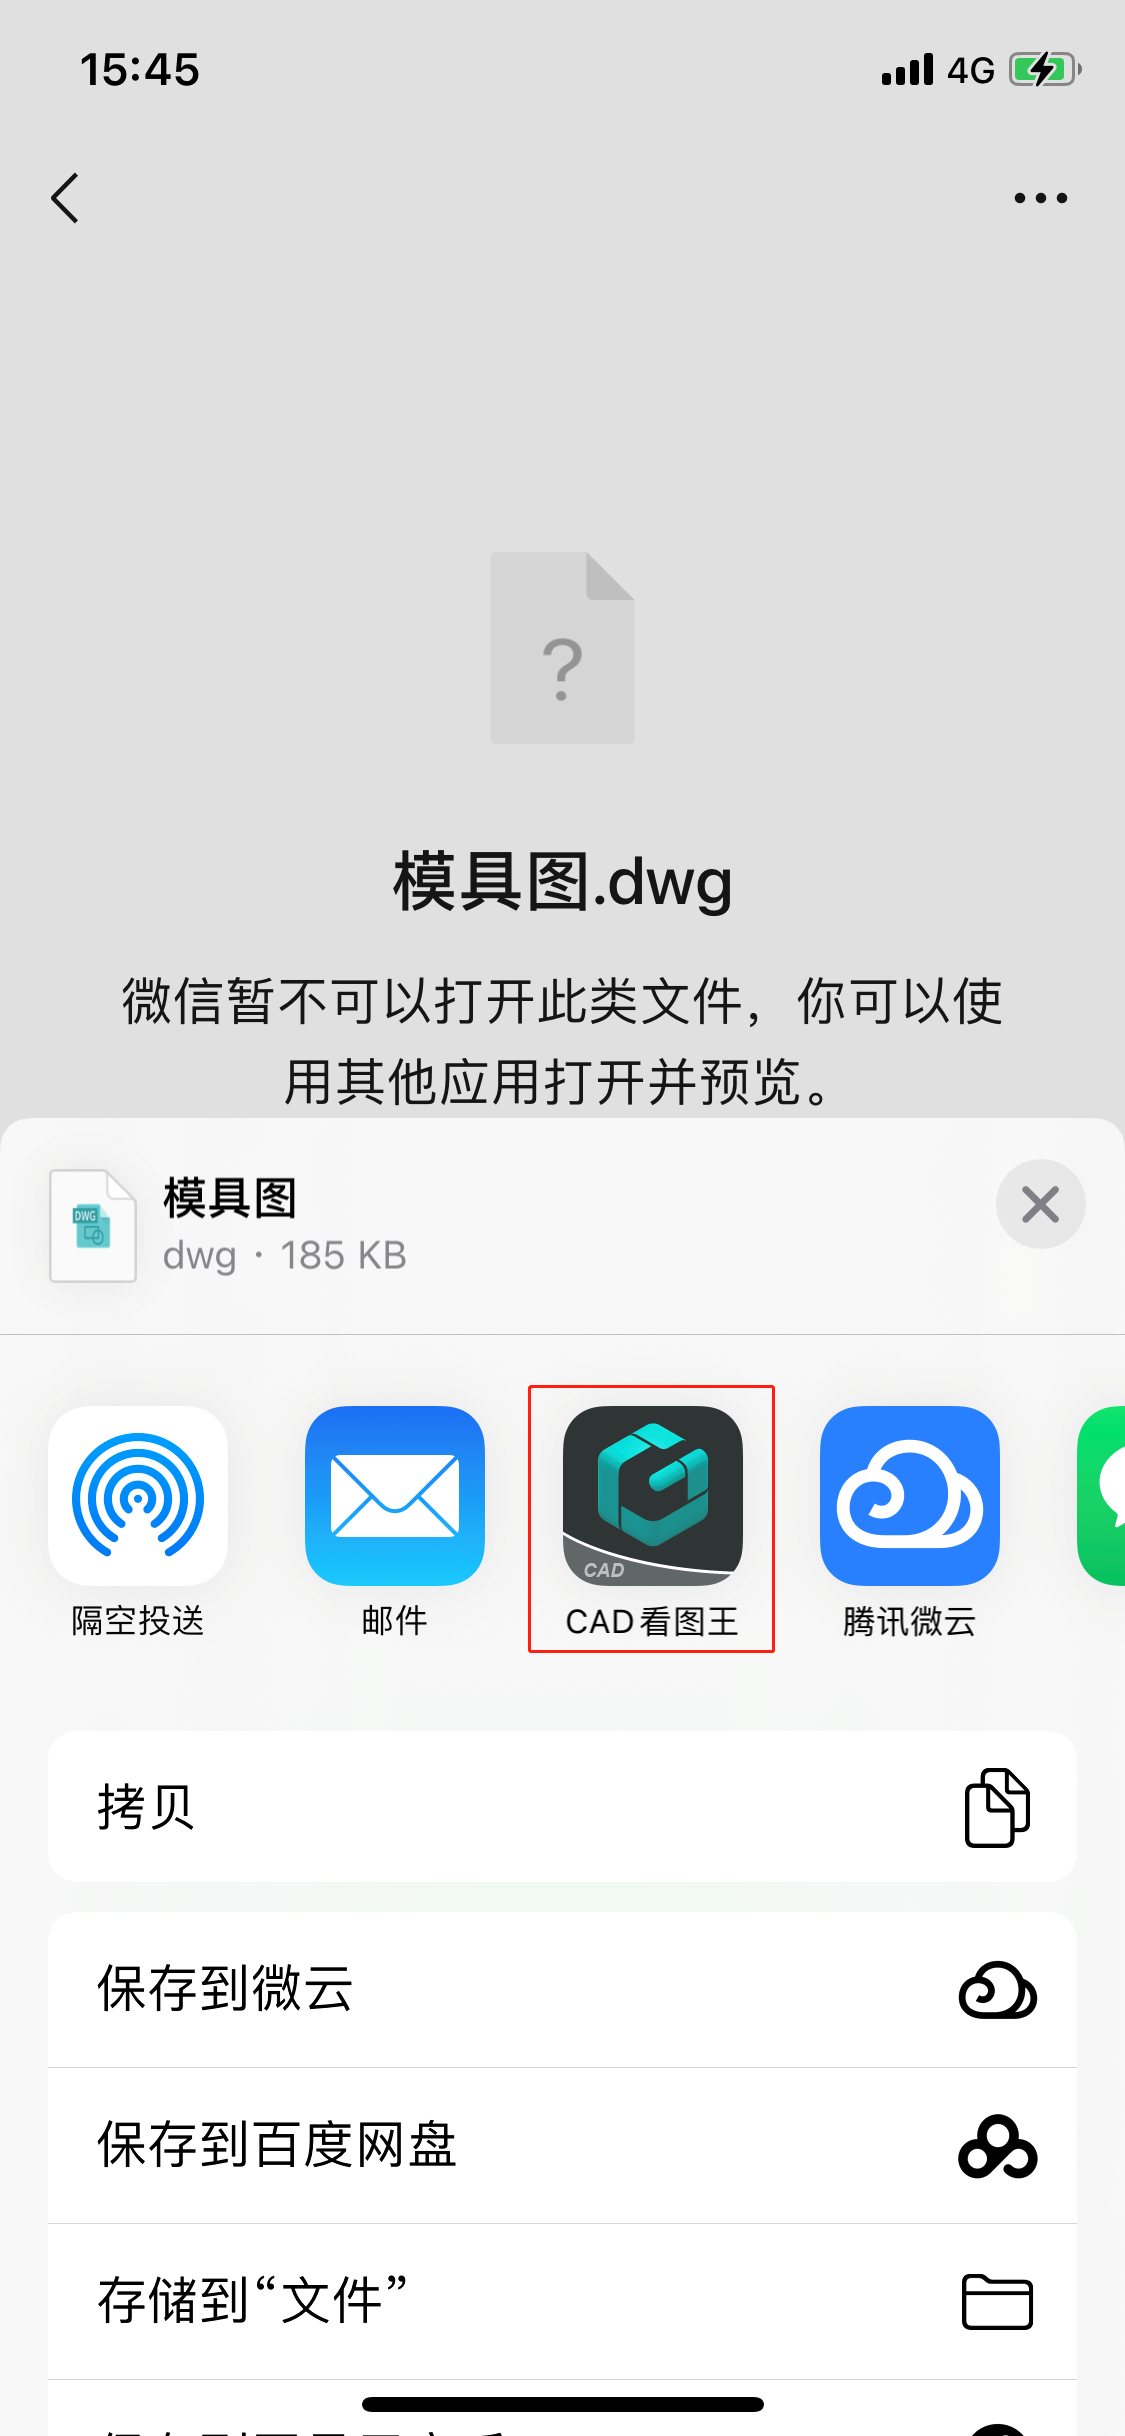 DWG是什么文件格式？手机中怎么打开DWG文件？